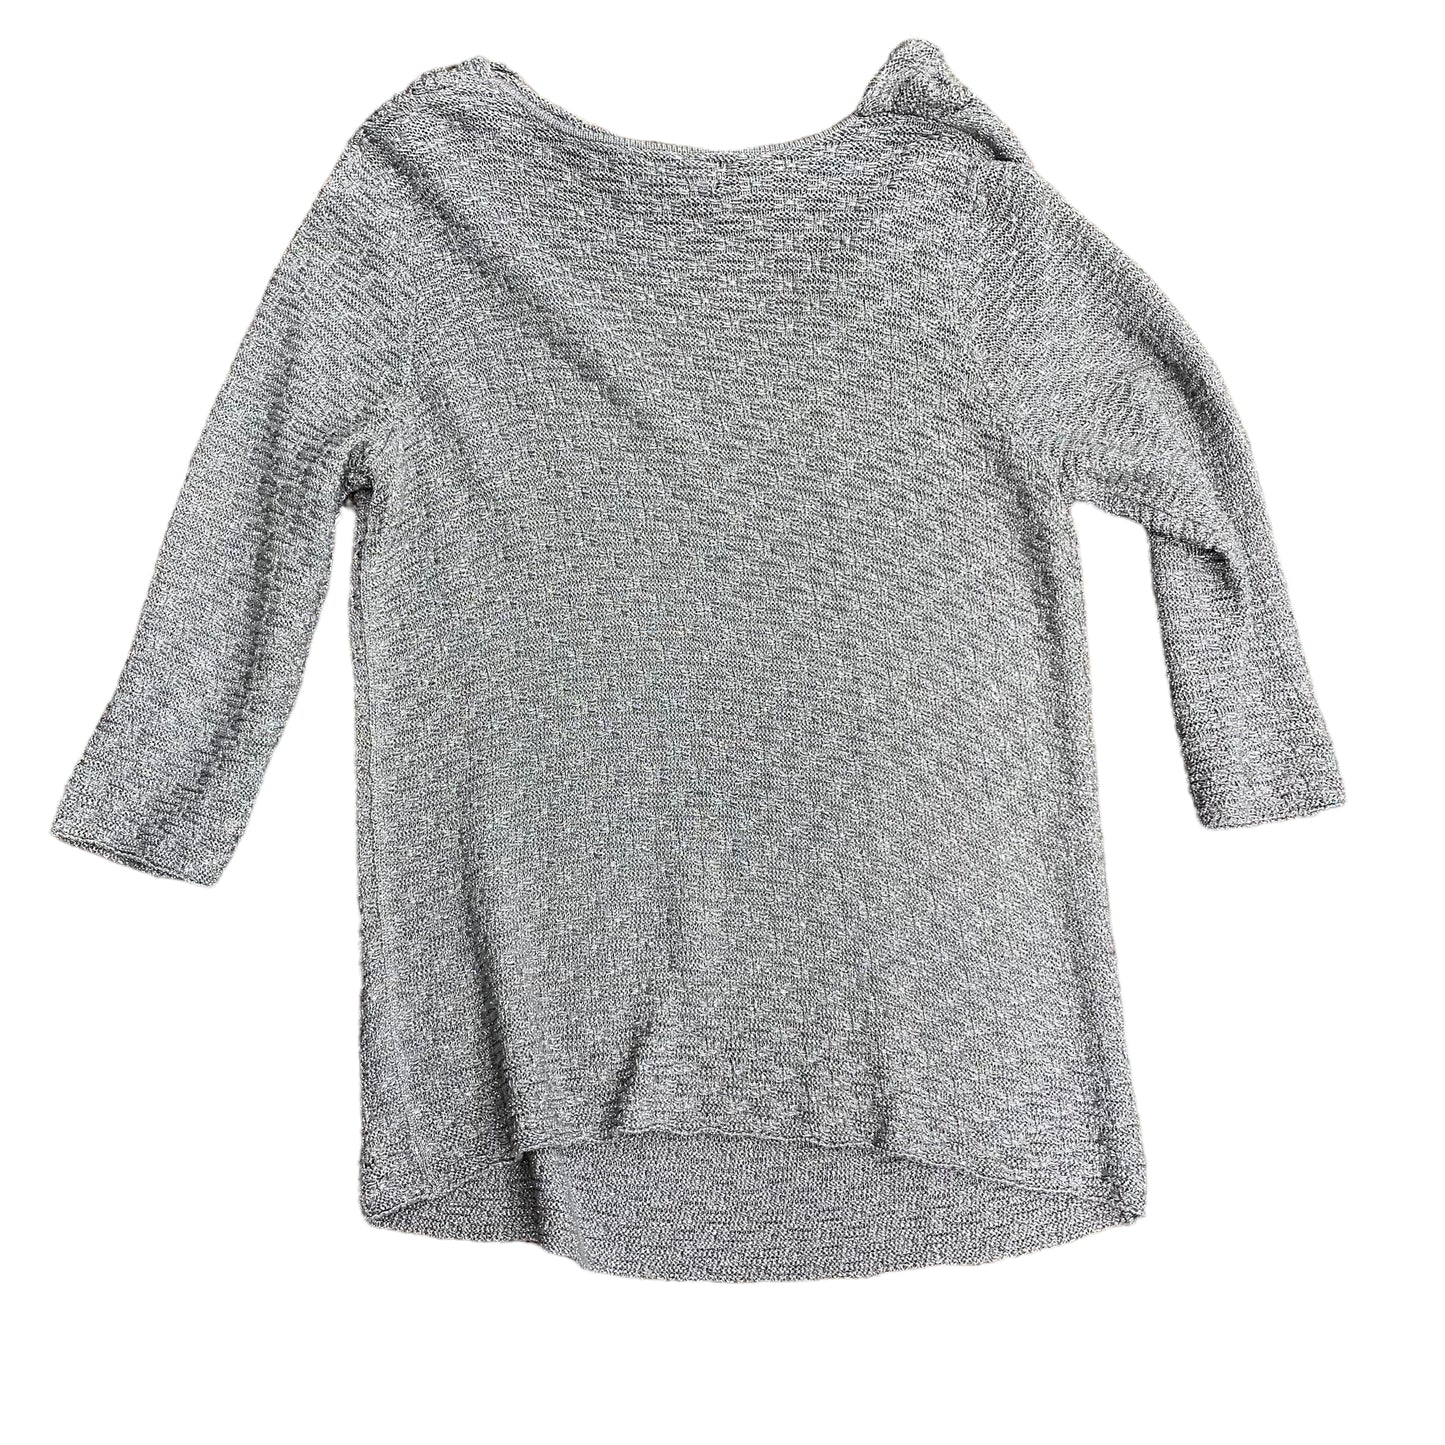 Sweater By Jones New York  Size: 2x